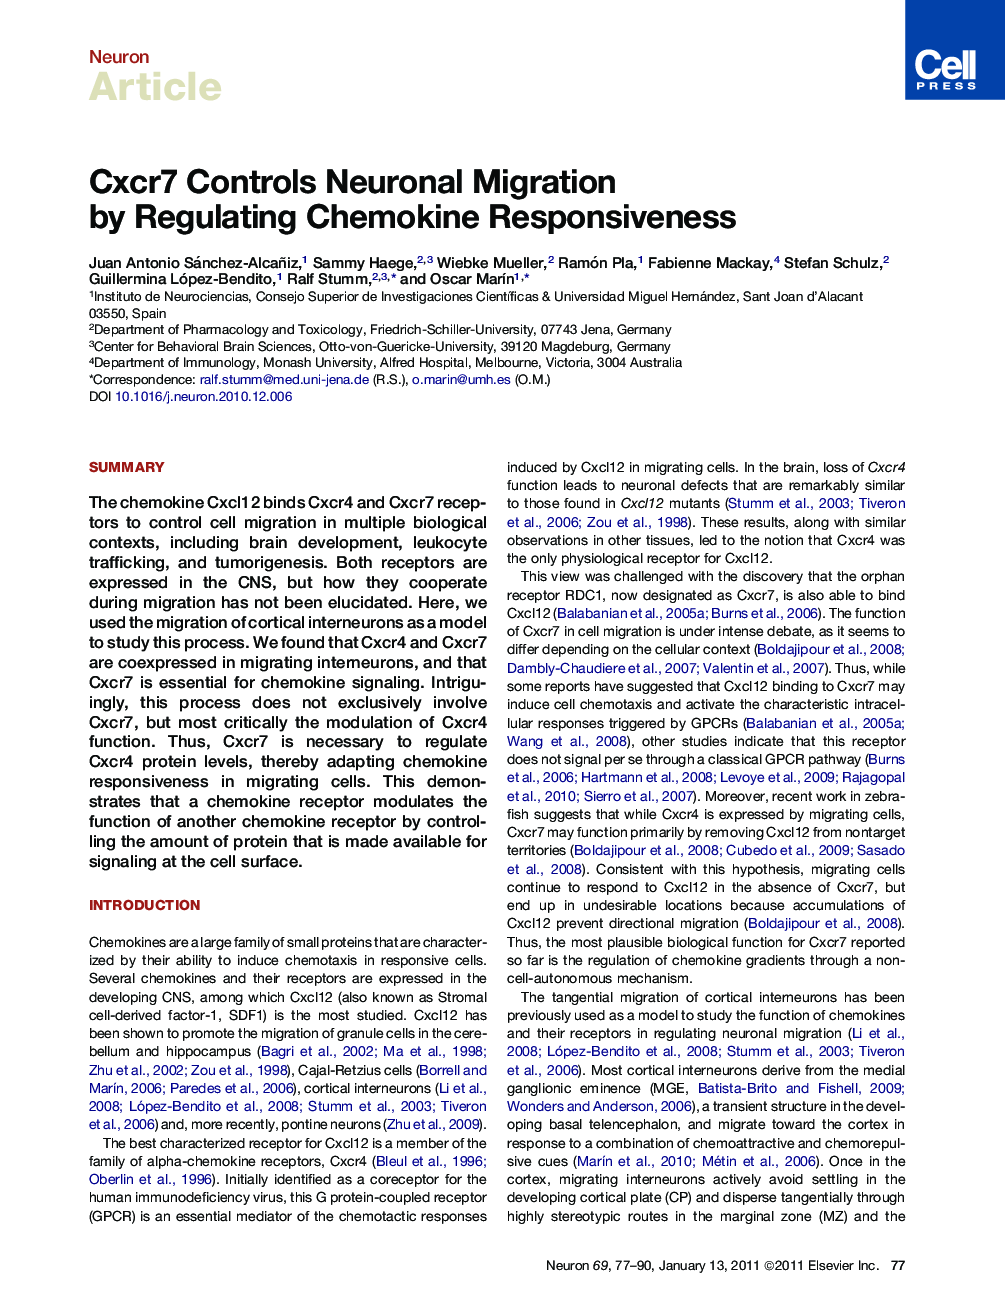 Cxcr7 Controls Neuronal Migration by Regulating Chemokine Responsiveness